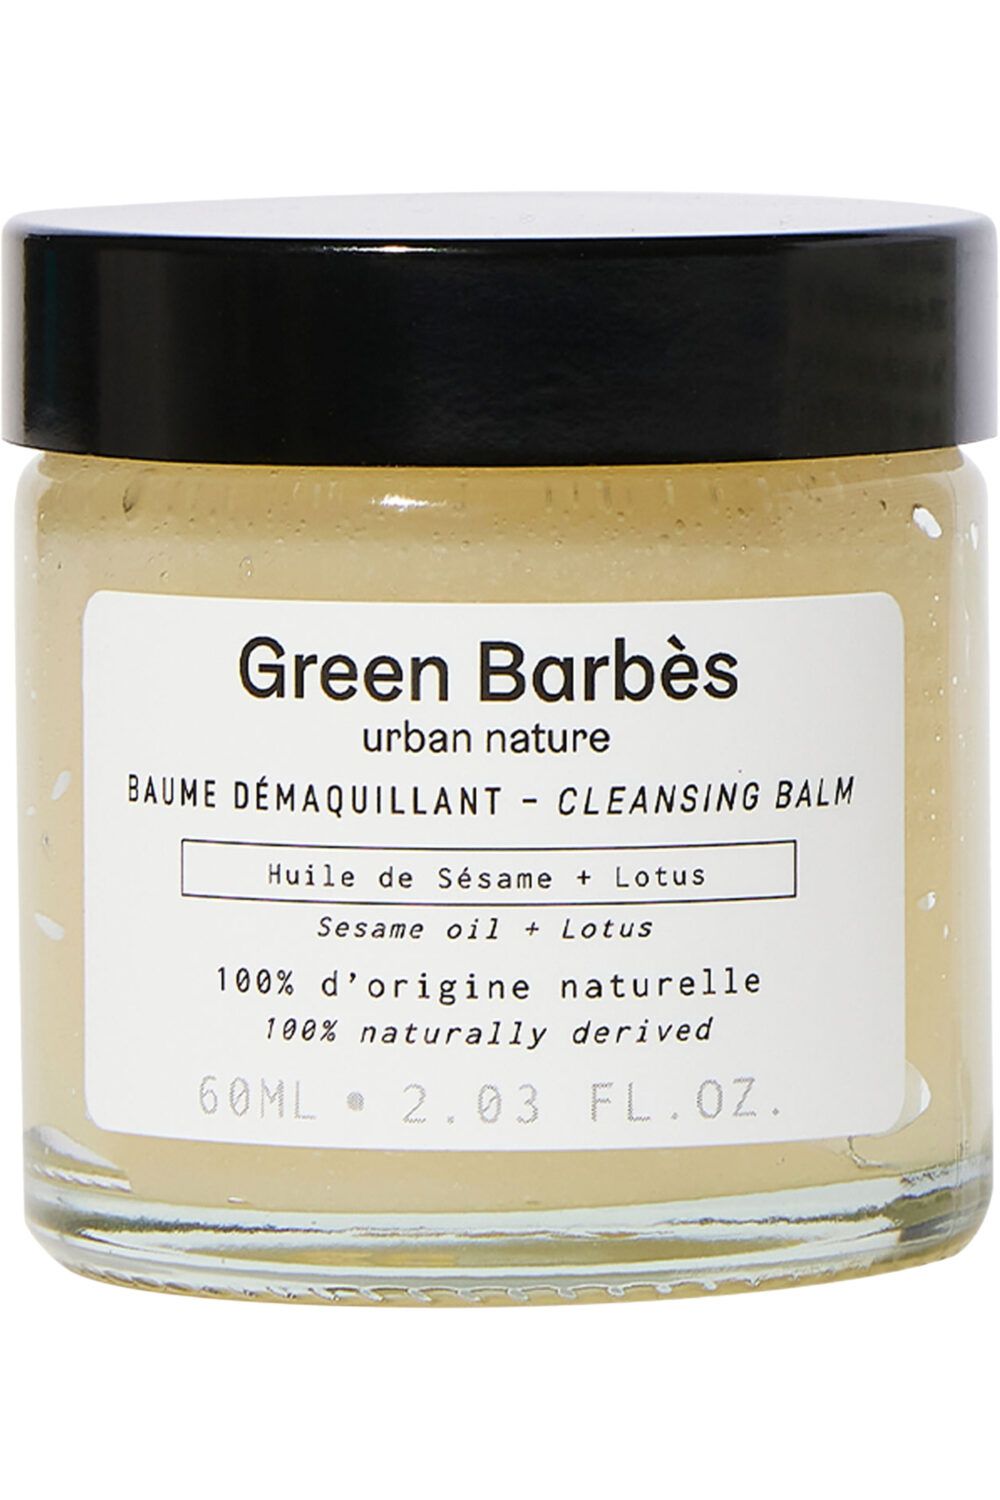 Green Barbès - Baume démaquillant